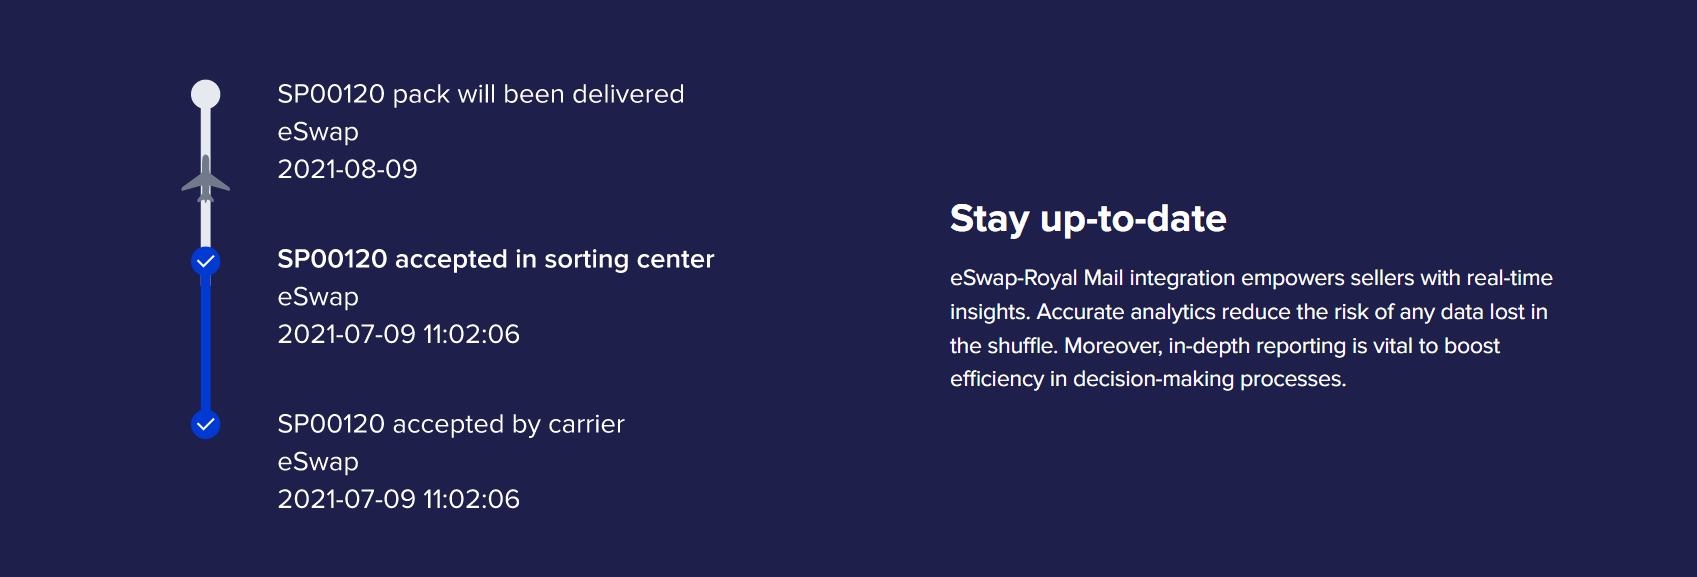 Royal Mail eSwap shipping integration